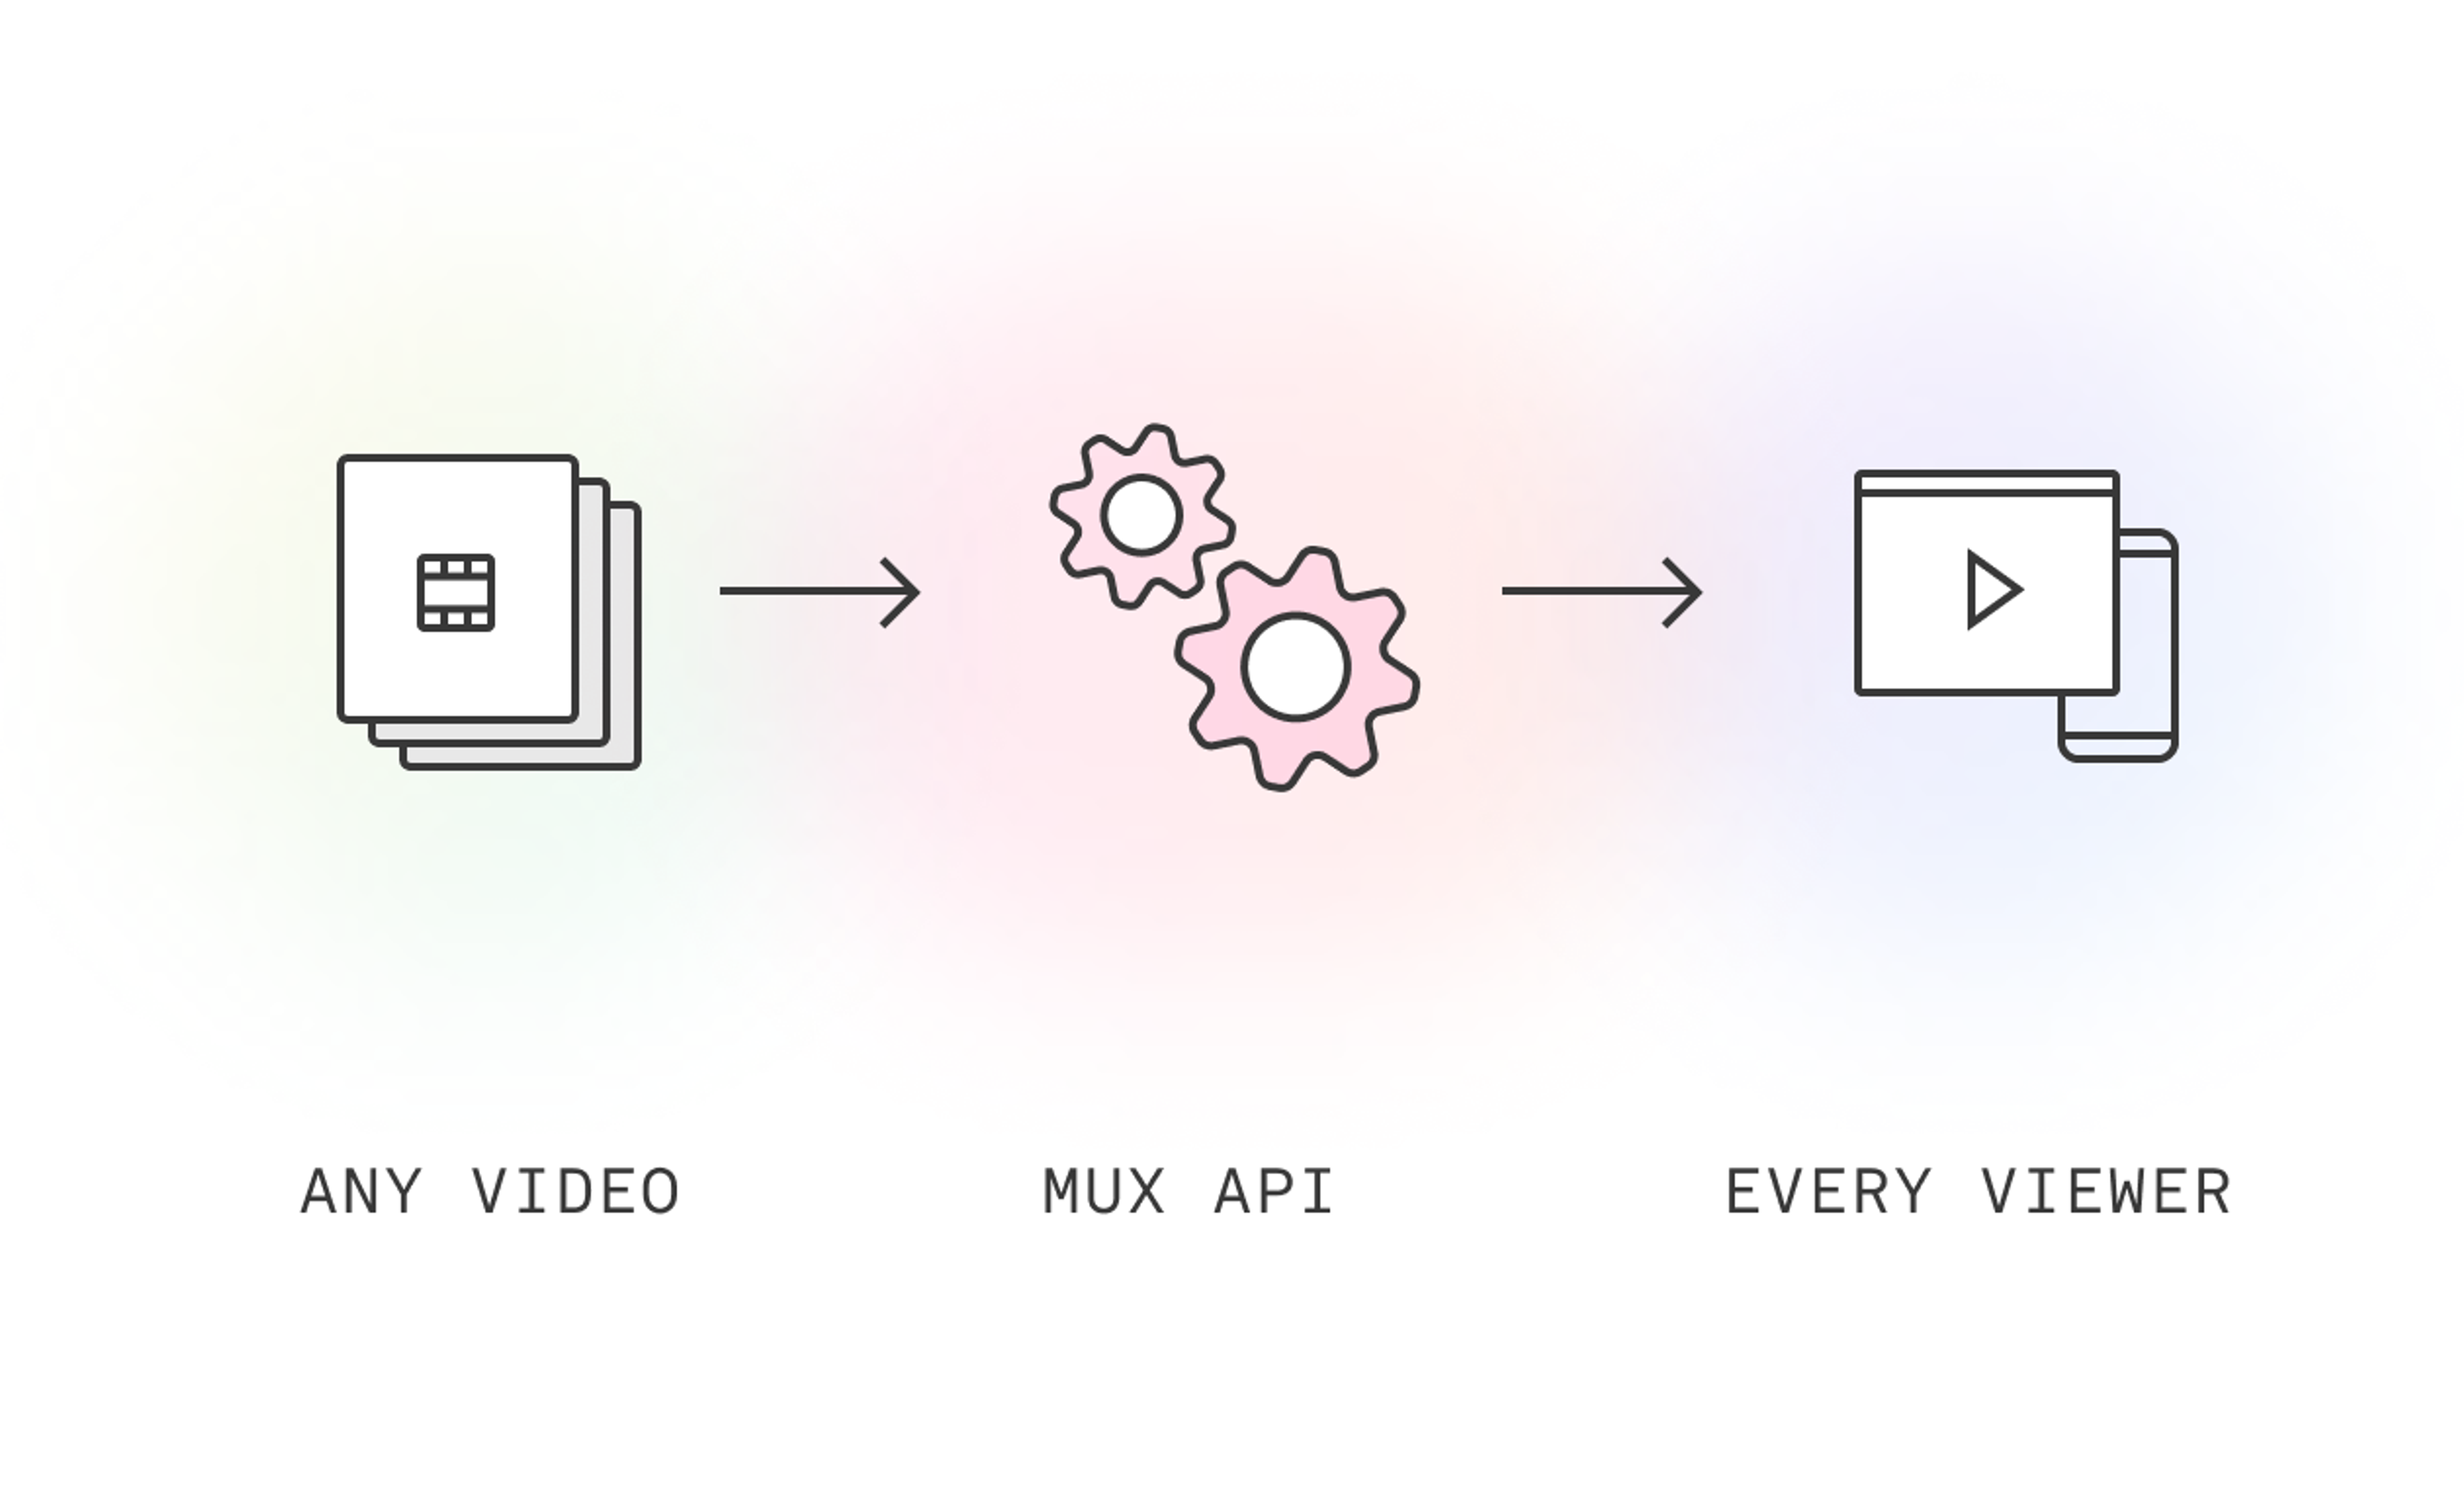 Video flow using Mux API